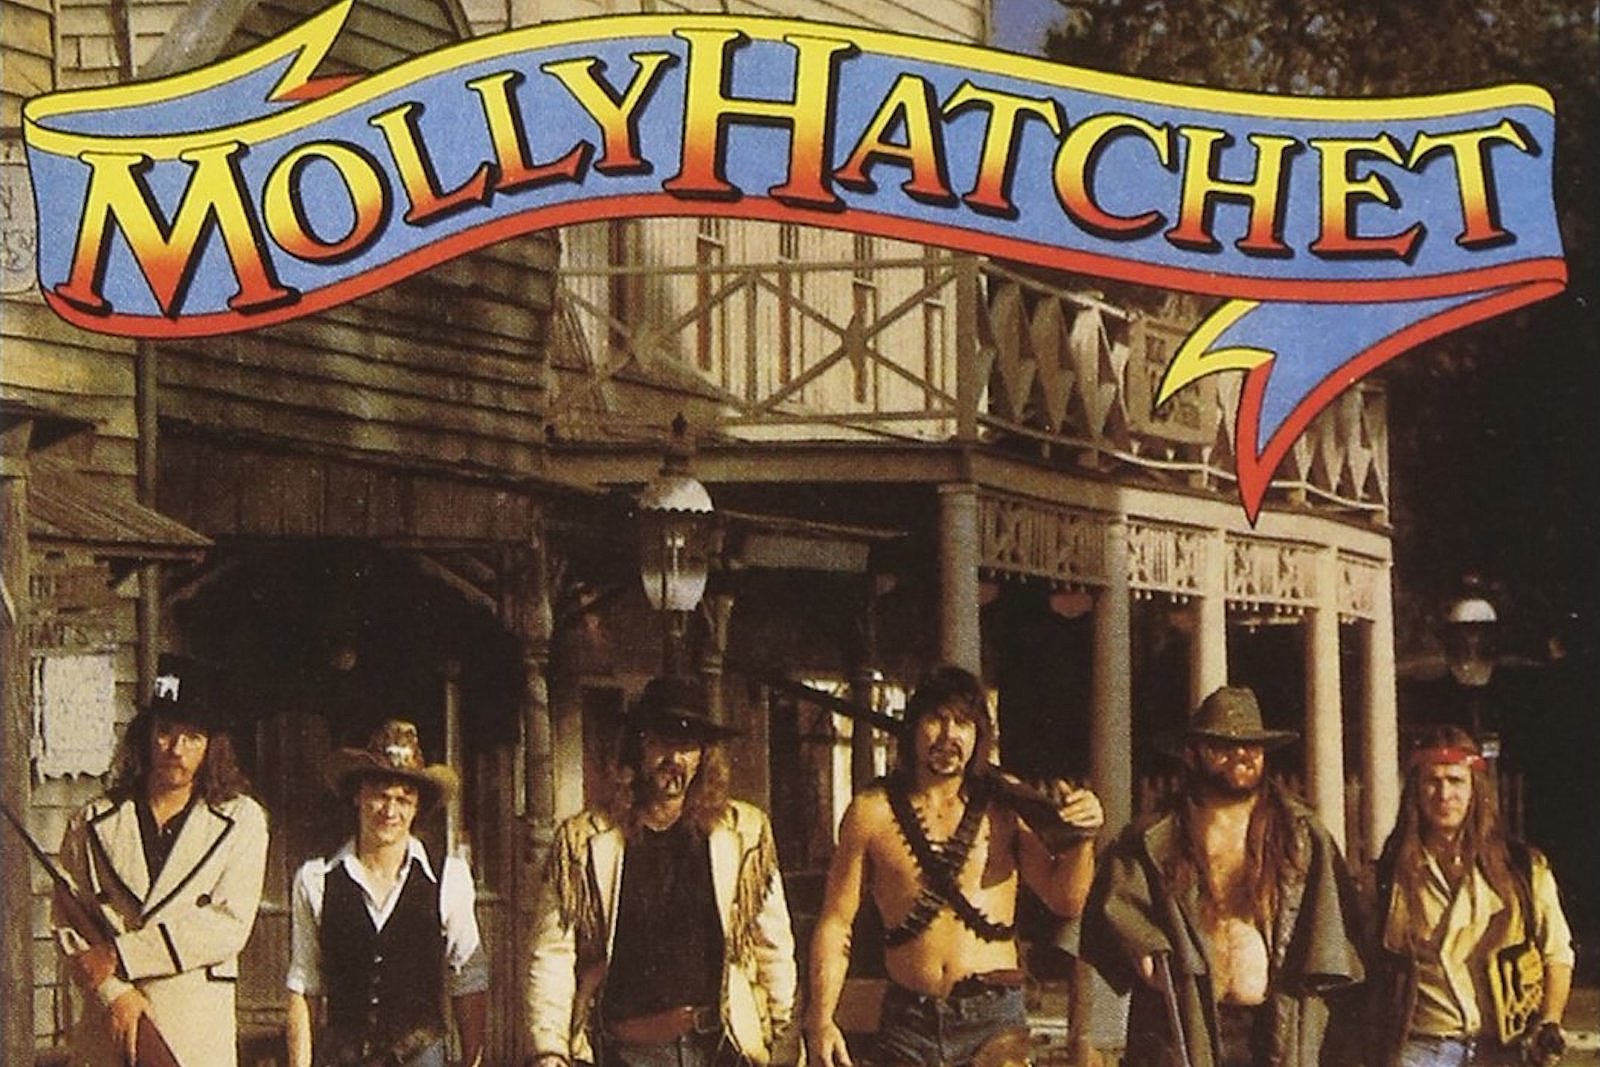 10 Molly Hatchet Songs